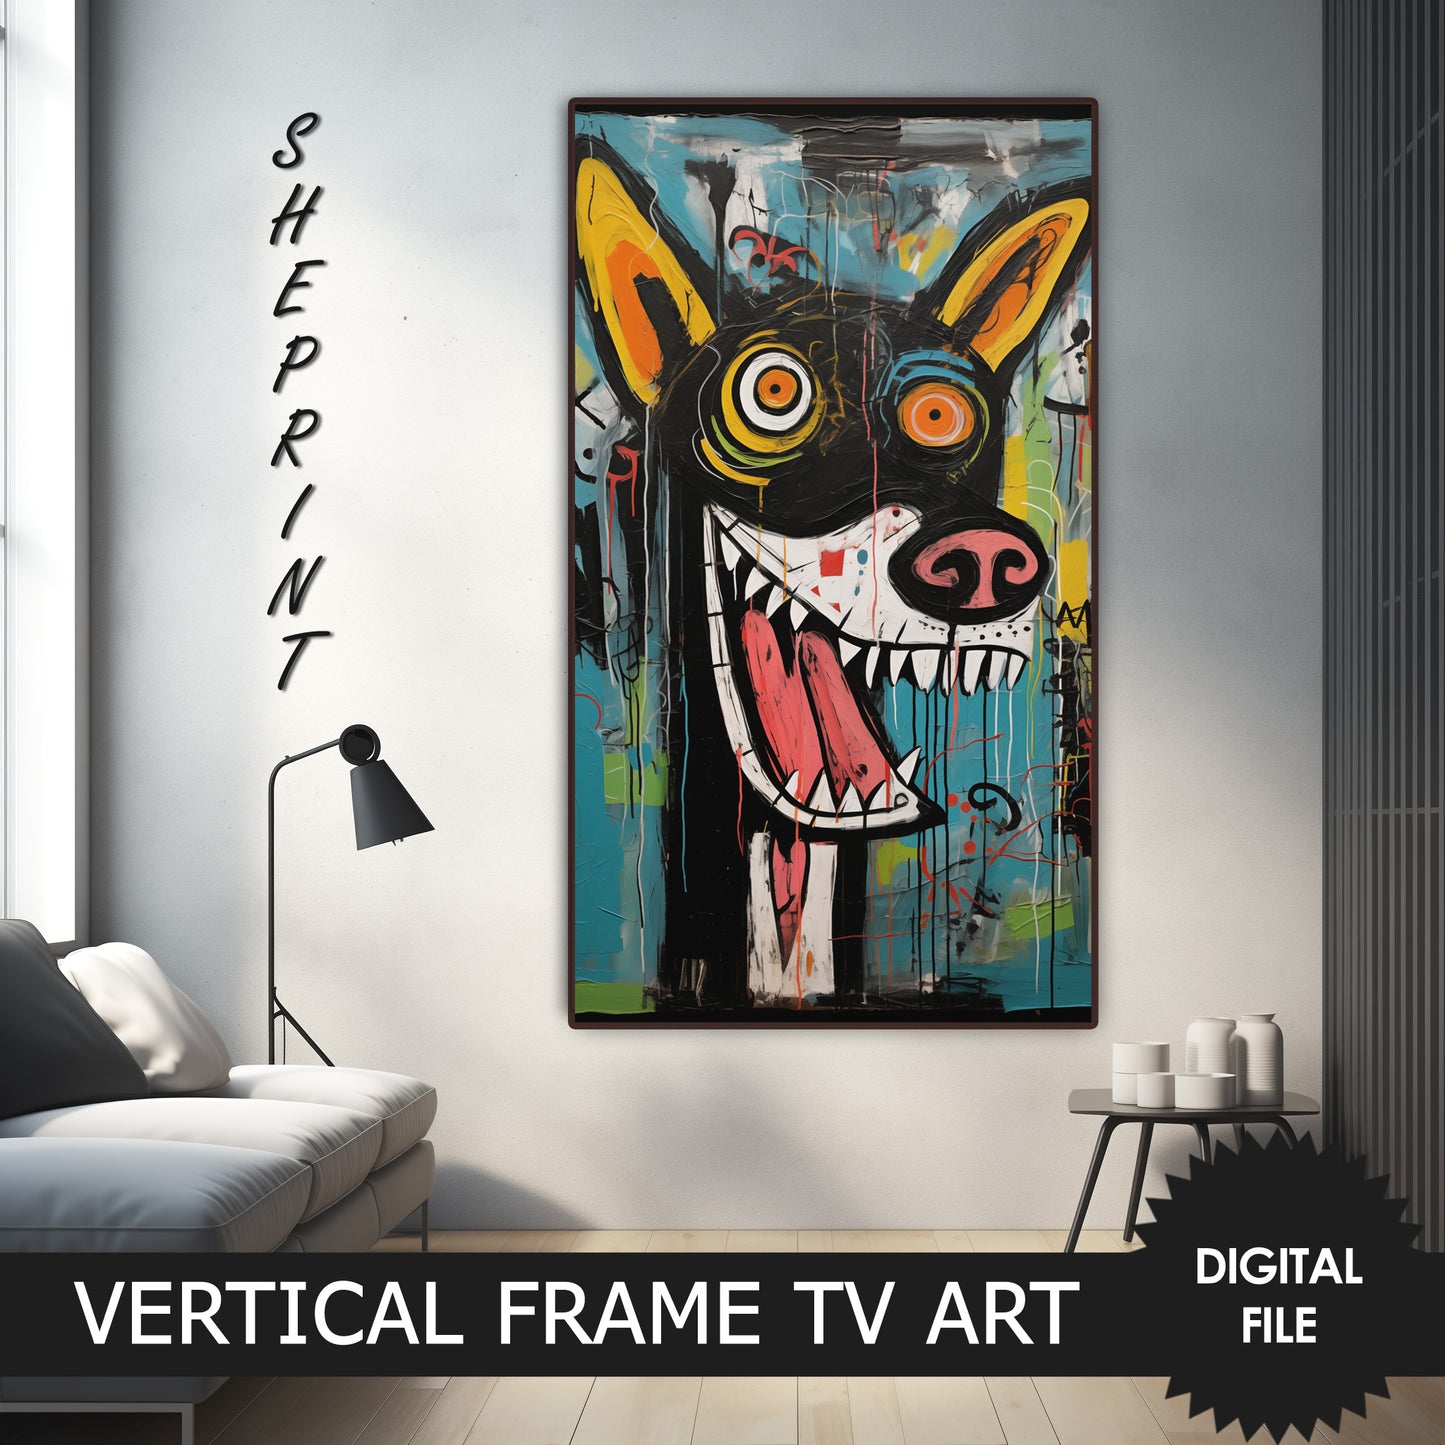 Vertical Frame TV Art, Dog, Raw Art Brut Oil Painting, Outsider Art preview on Samsung Frame TV when mounted vertically